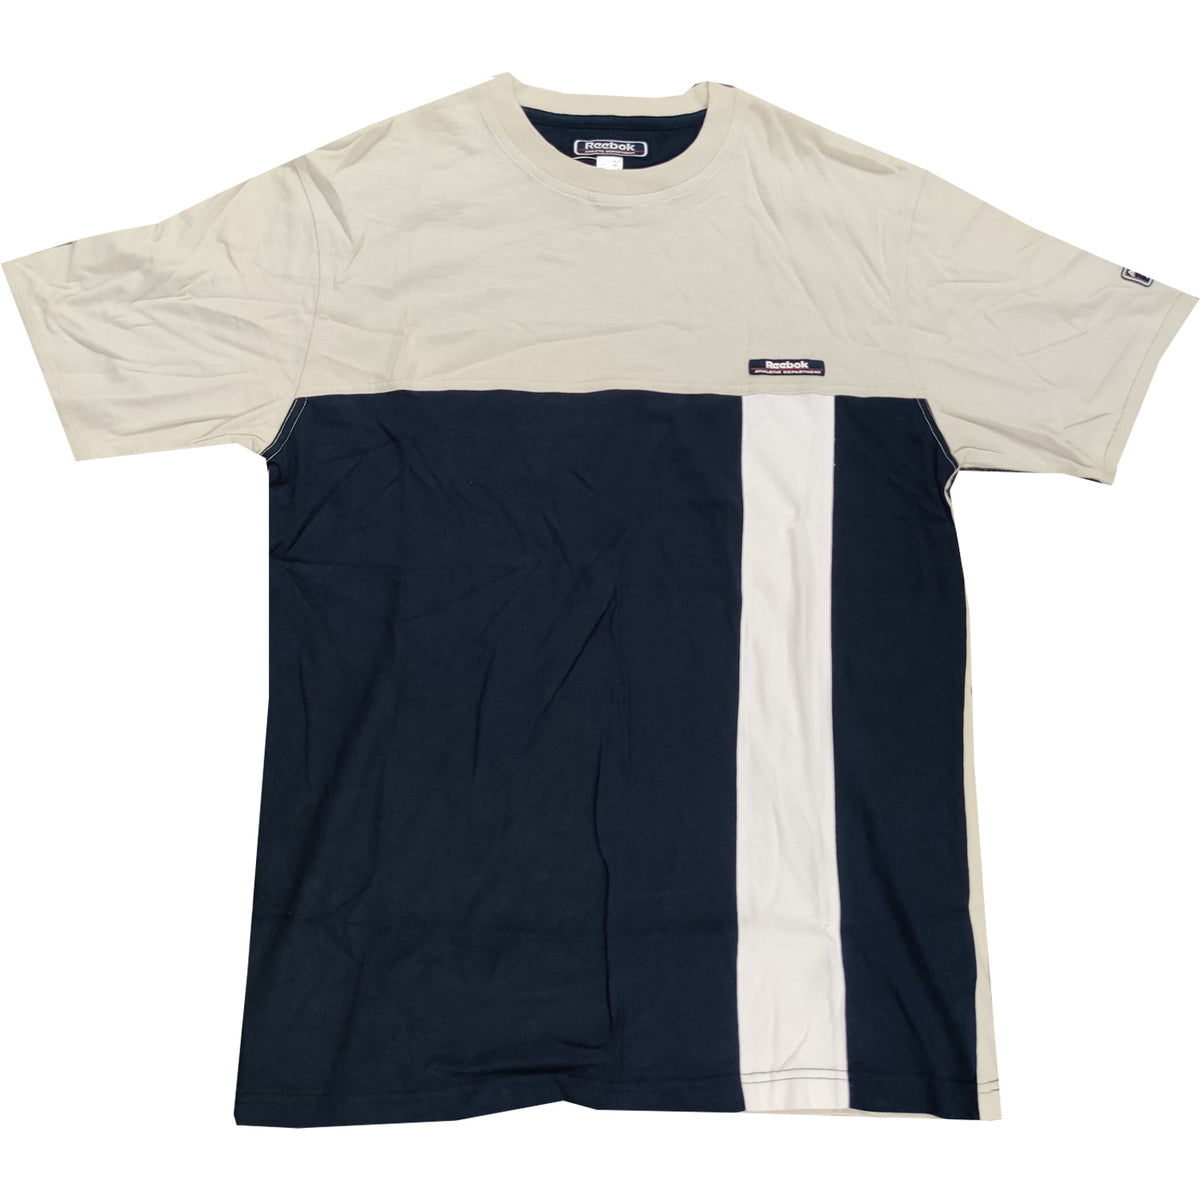 Reebok Mens Clearance Contrast Bar T-Shirt - Medium